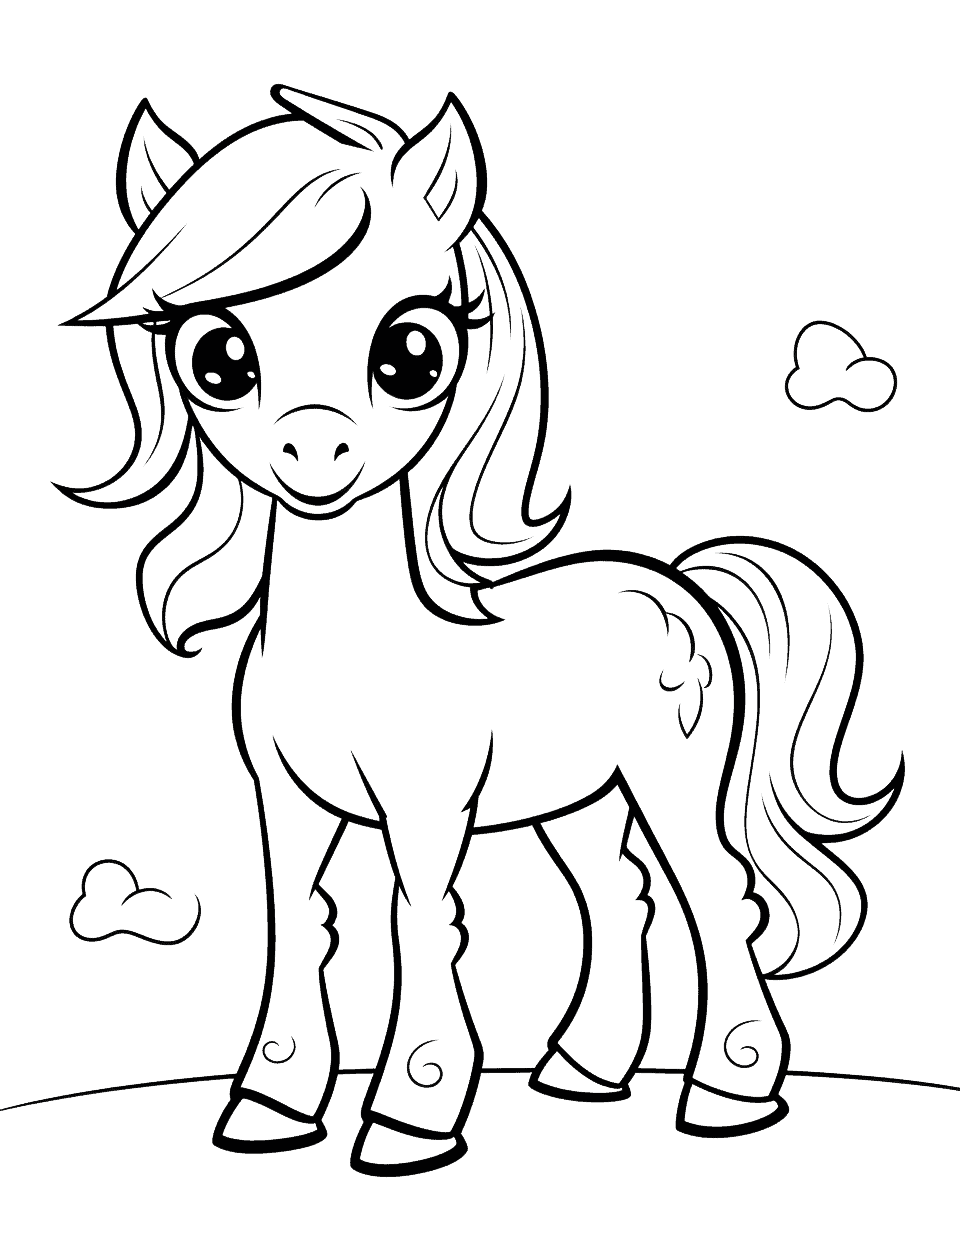 Kawaii Pony Coloring Page - A super cute, kawaii style pony with big sparkling eyes.